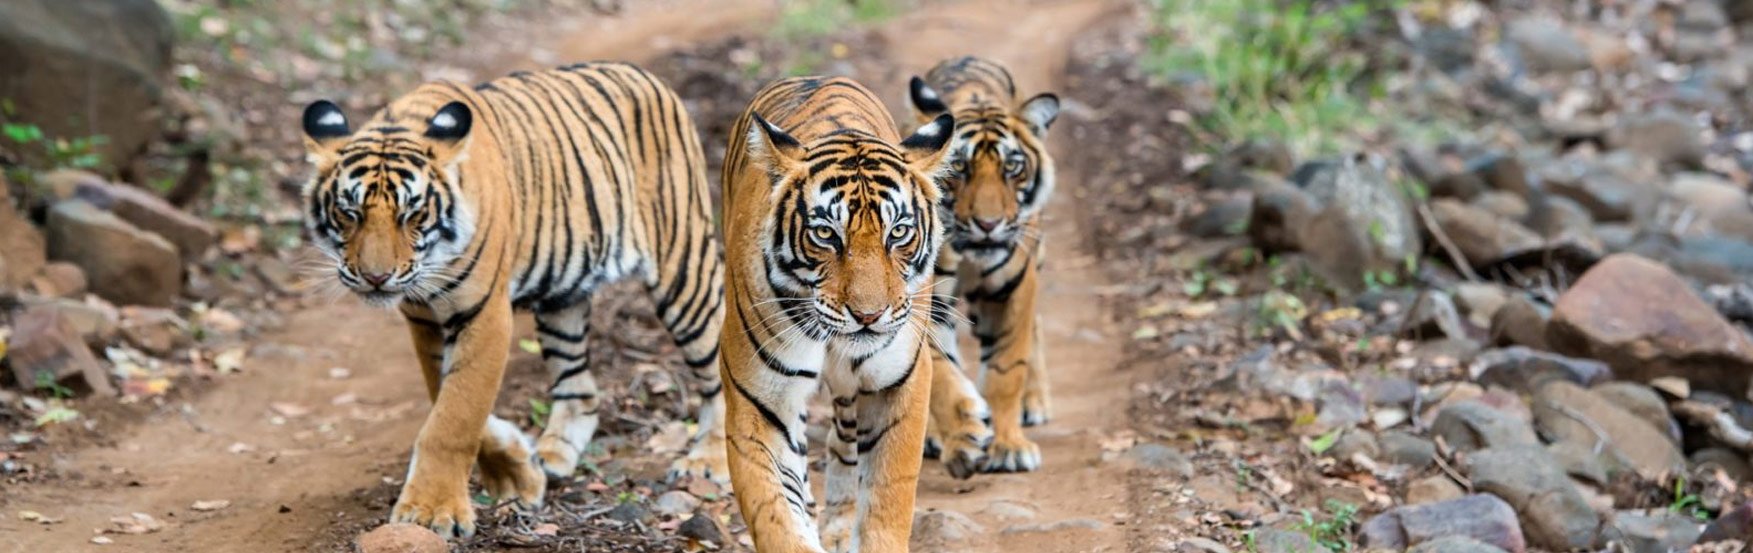 Pench National Park | Pench Wildlife Sanctuary Madhya Pradesh